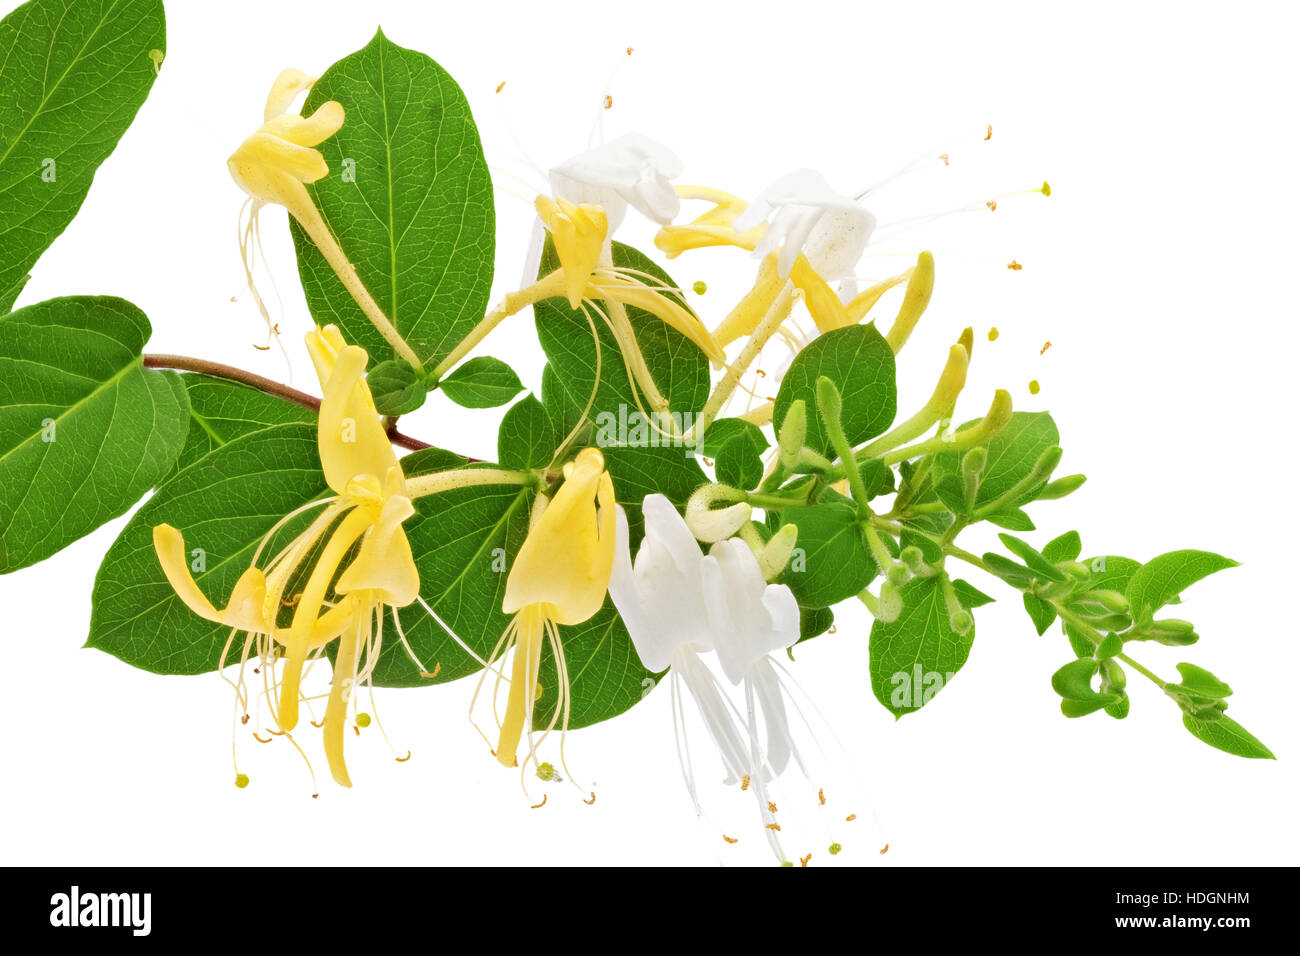 Flowering white-yellow Honeysuckle(Woodbine). Isolated on white background. Stock Photo